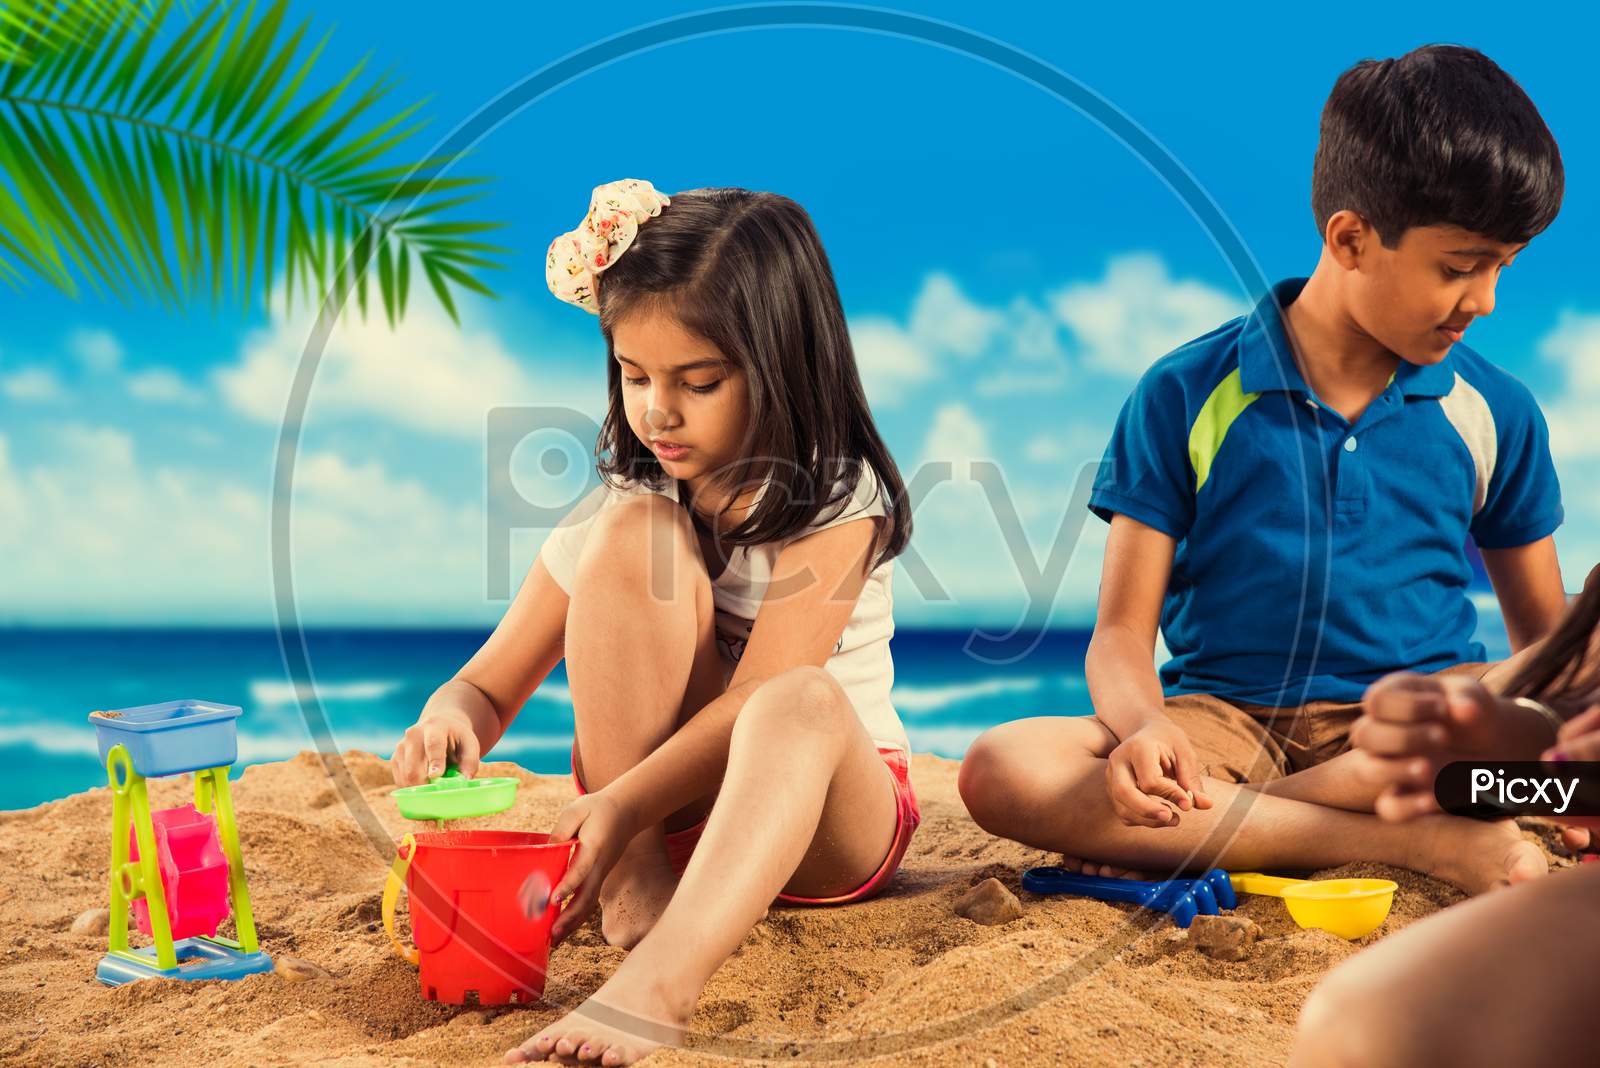 Kids playing at beach